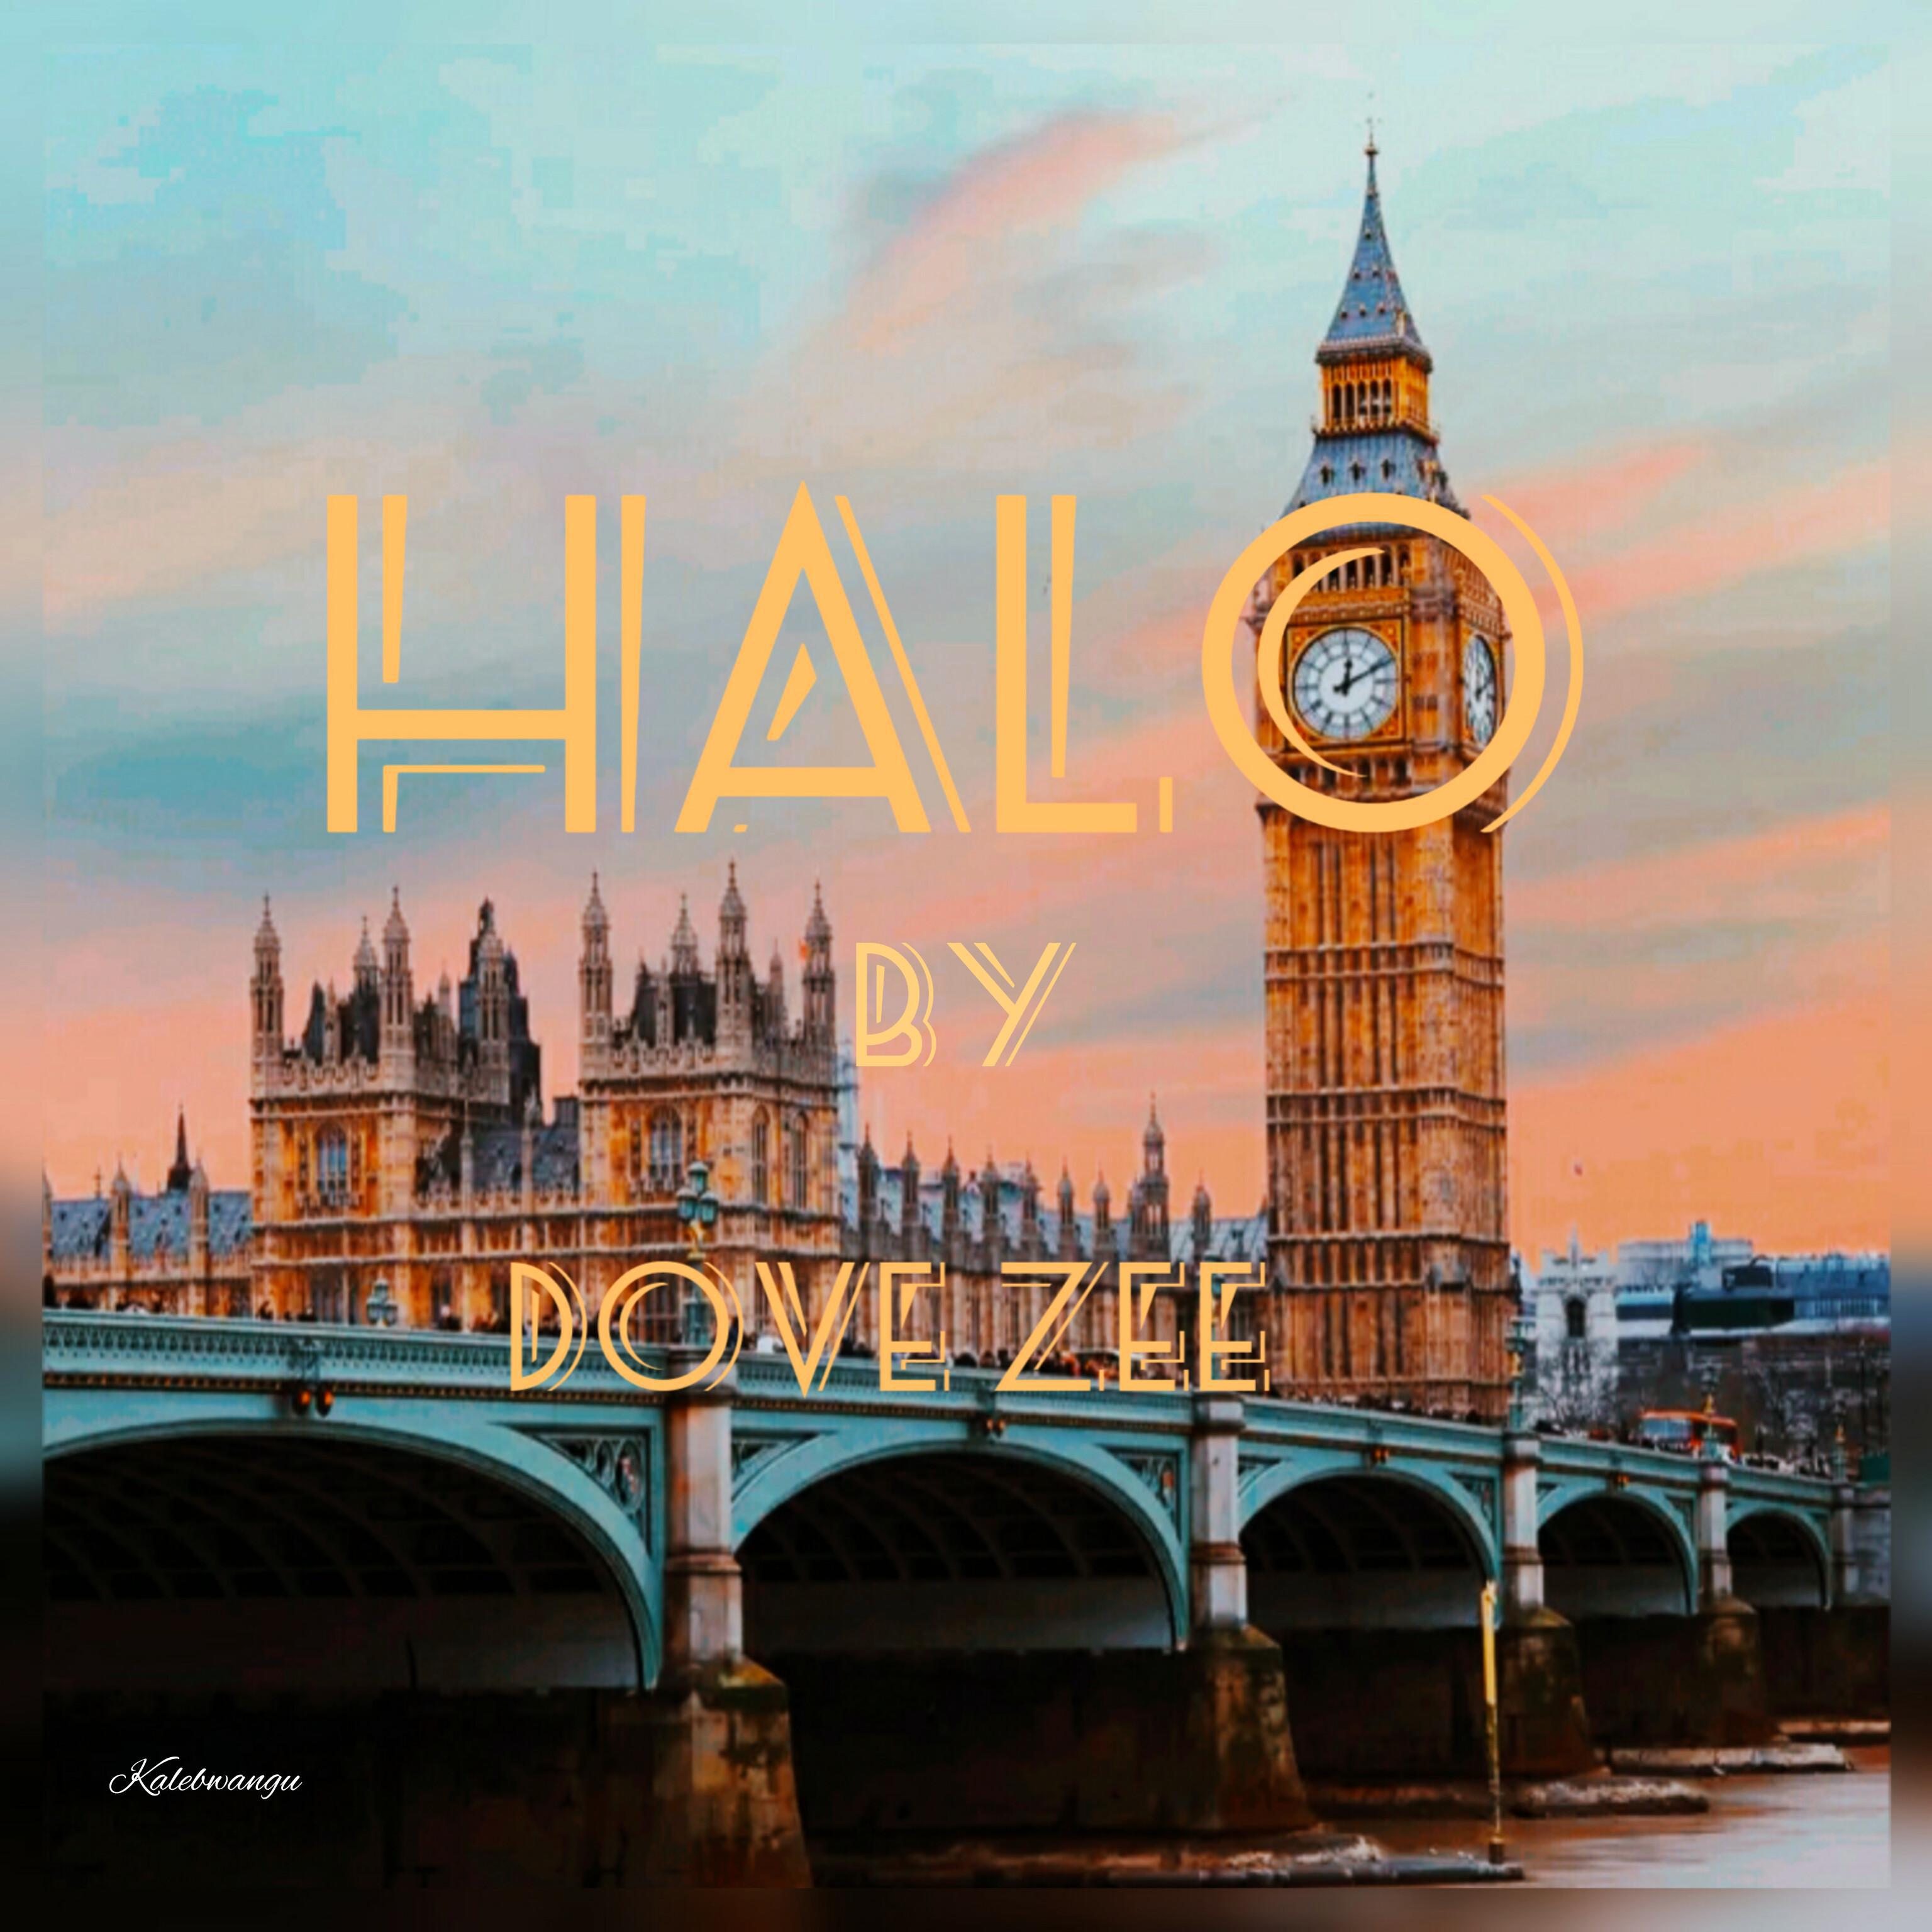 Постер альбома Halo